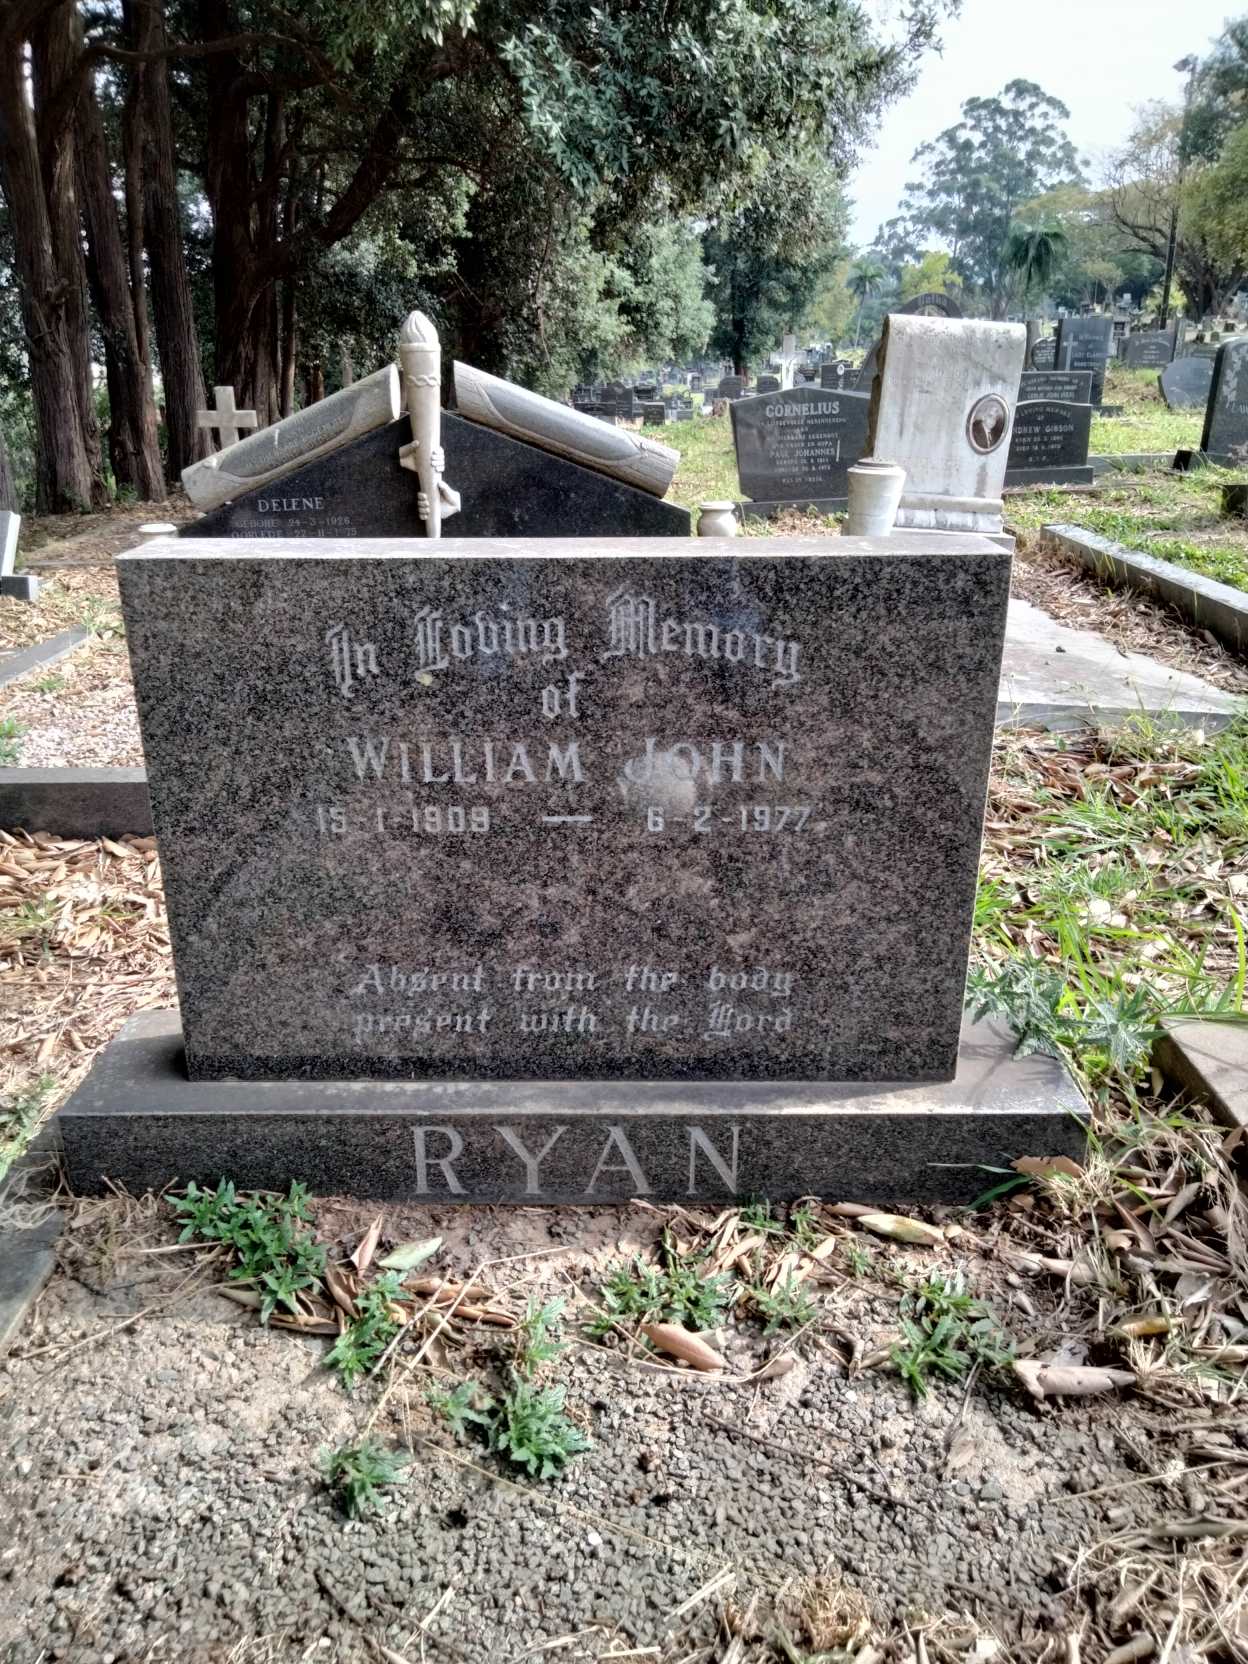 RYAN William John 1919-1977